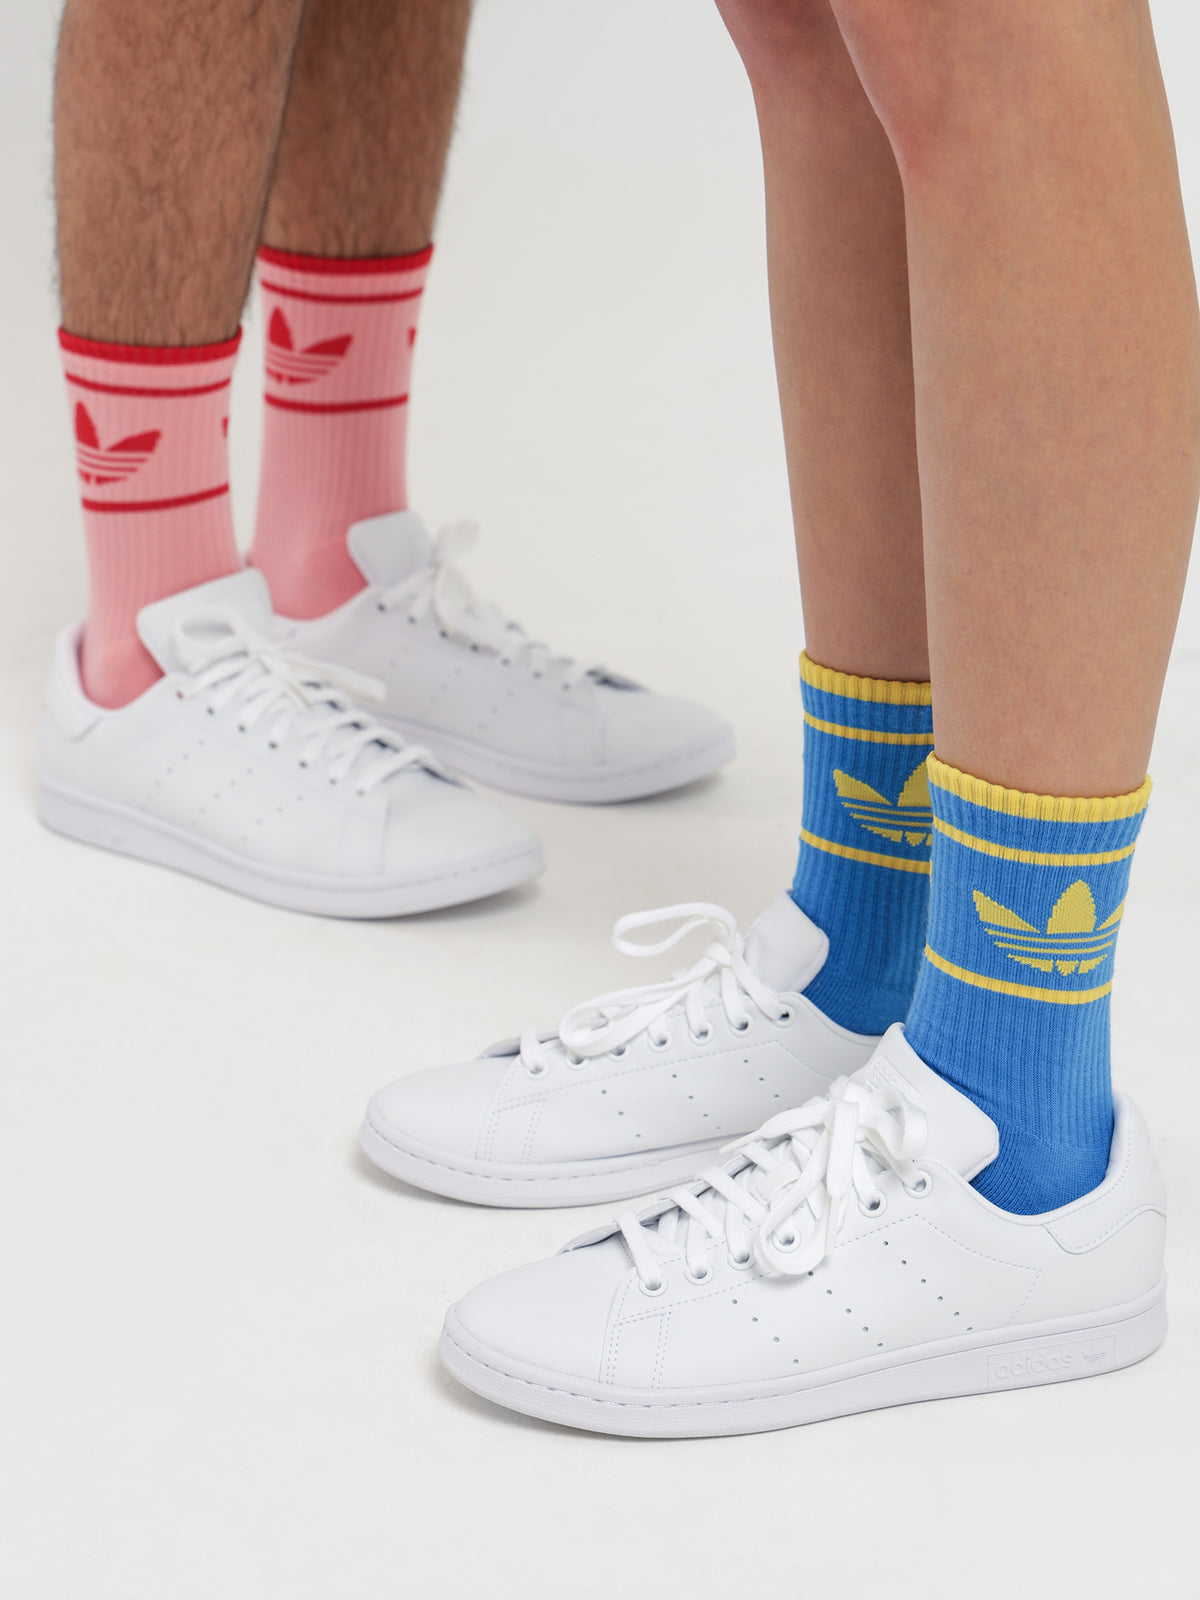 Two Pairs of ADICOLOR 70s Crew Socks in Superpop Pink &amp; Bluebird Blue